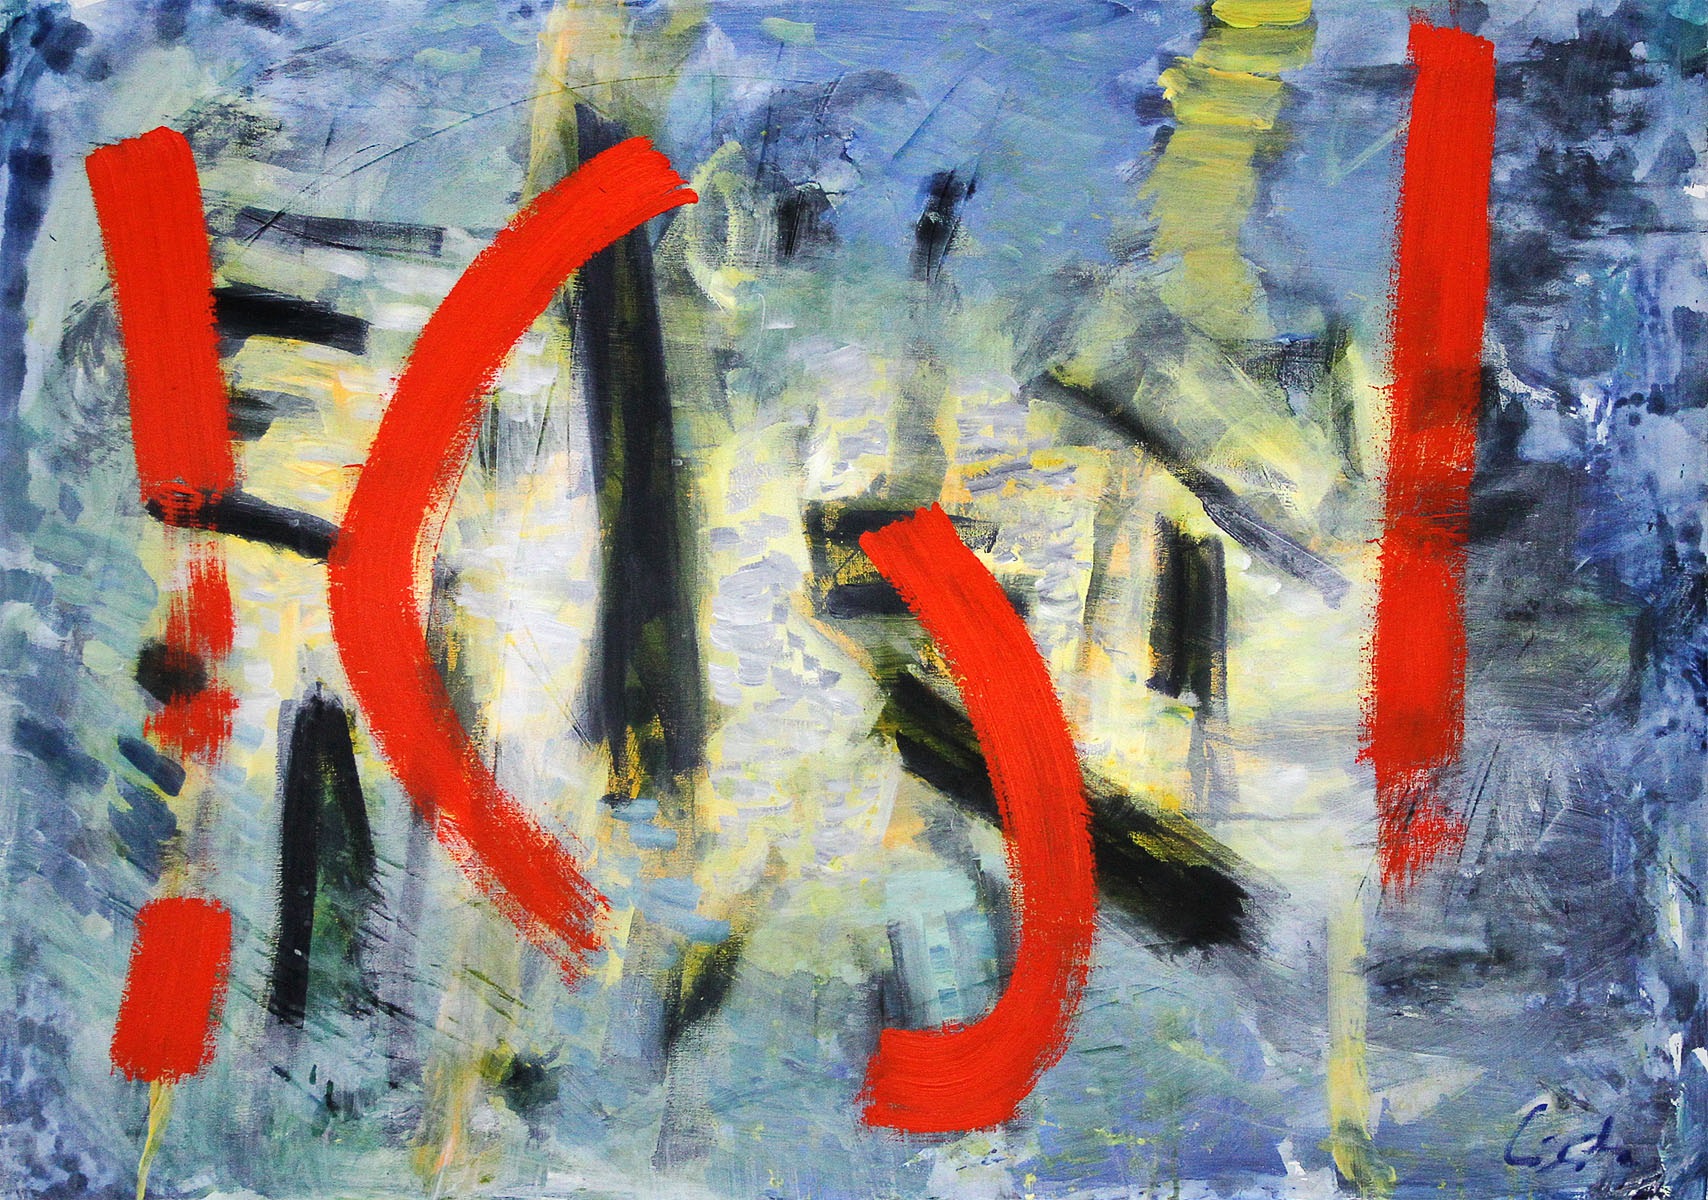 M. Cieśla: "Abstrakt von Musik inspiriert - Sonny Rollins", Original/Unikat, expressionist.Ölgemälde